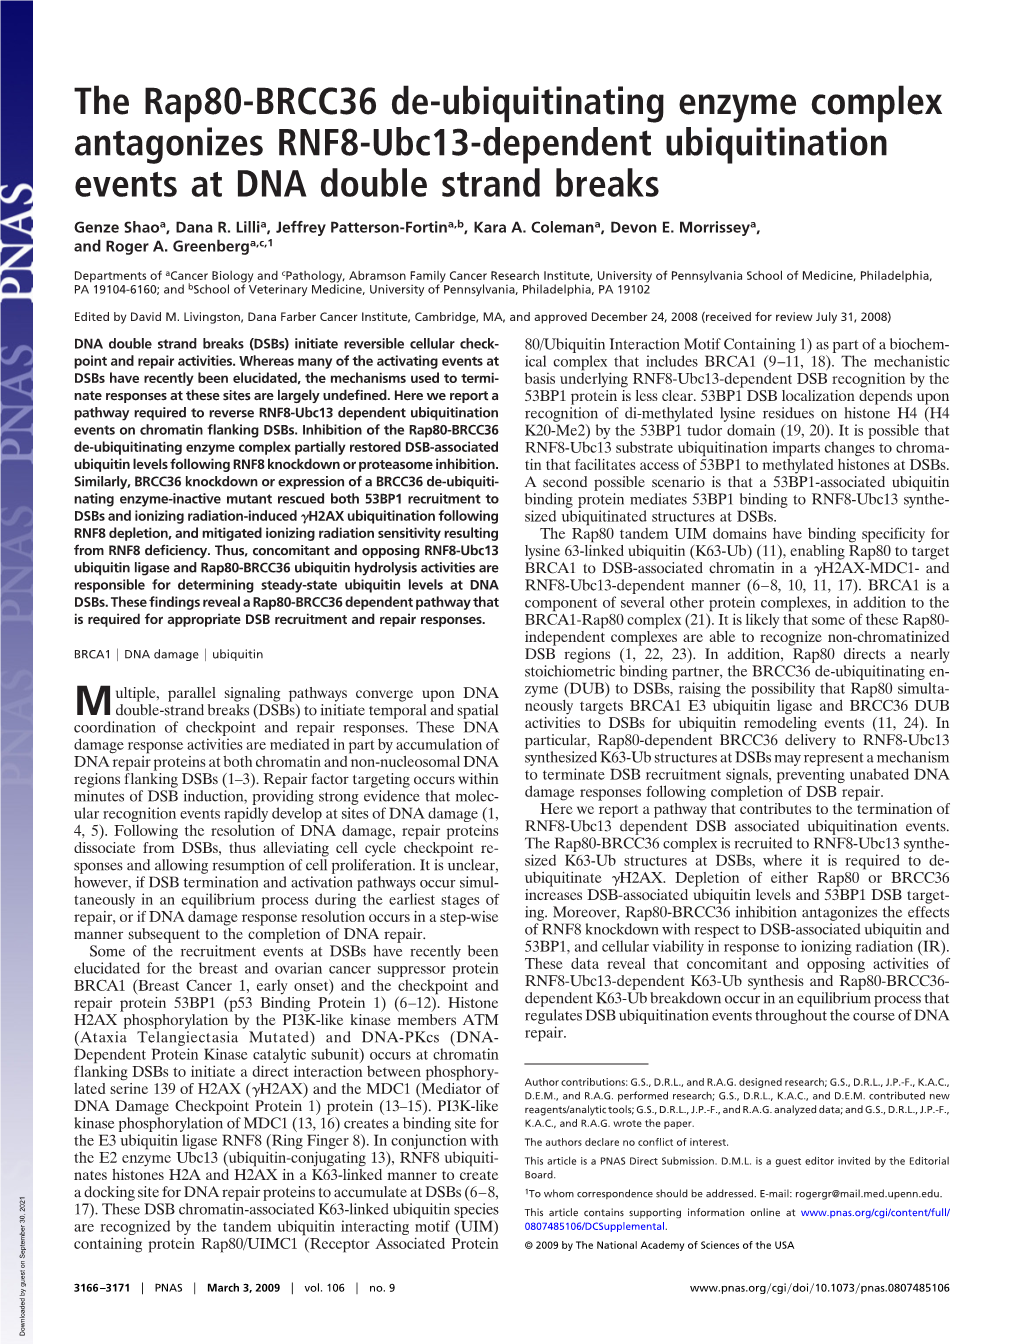 The Rap80-BRCC36 De-Ubiquitinating Enzyme Complex Antagonizes RNF8-Ubc13-Dependent Ubiquitination Events at DNA Double Strand Breaks